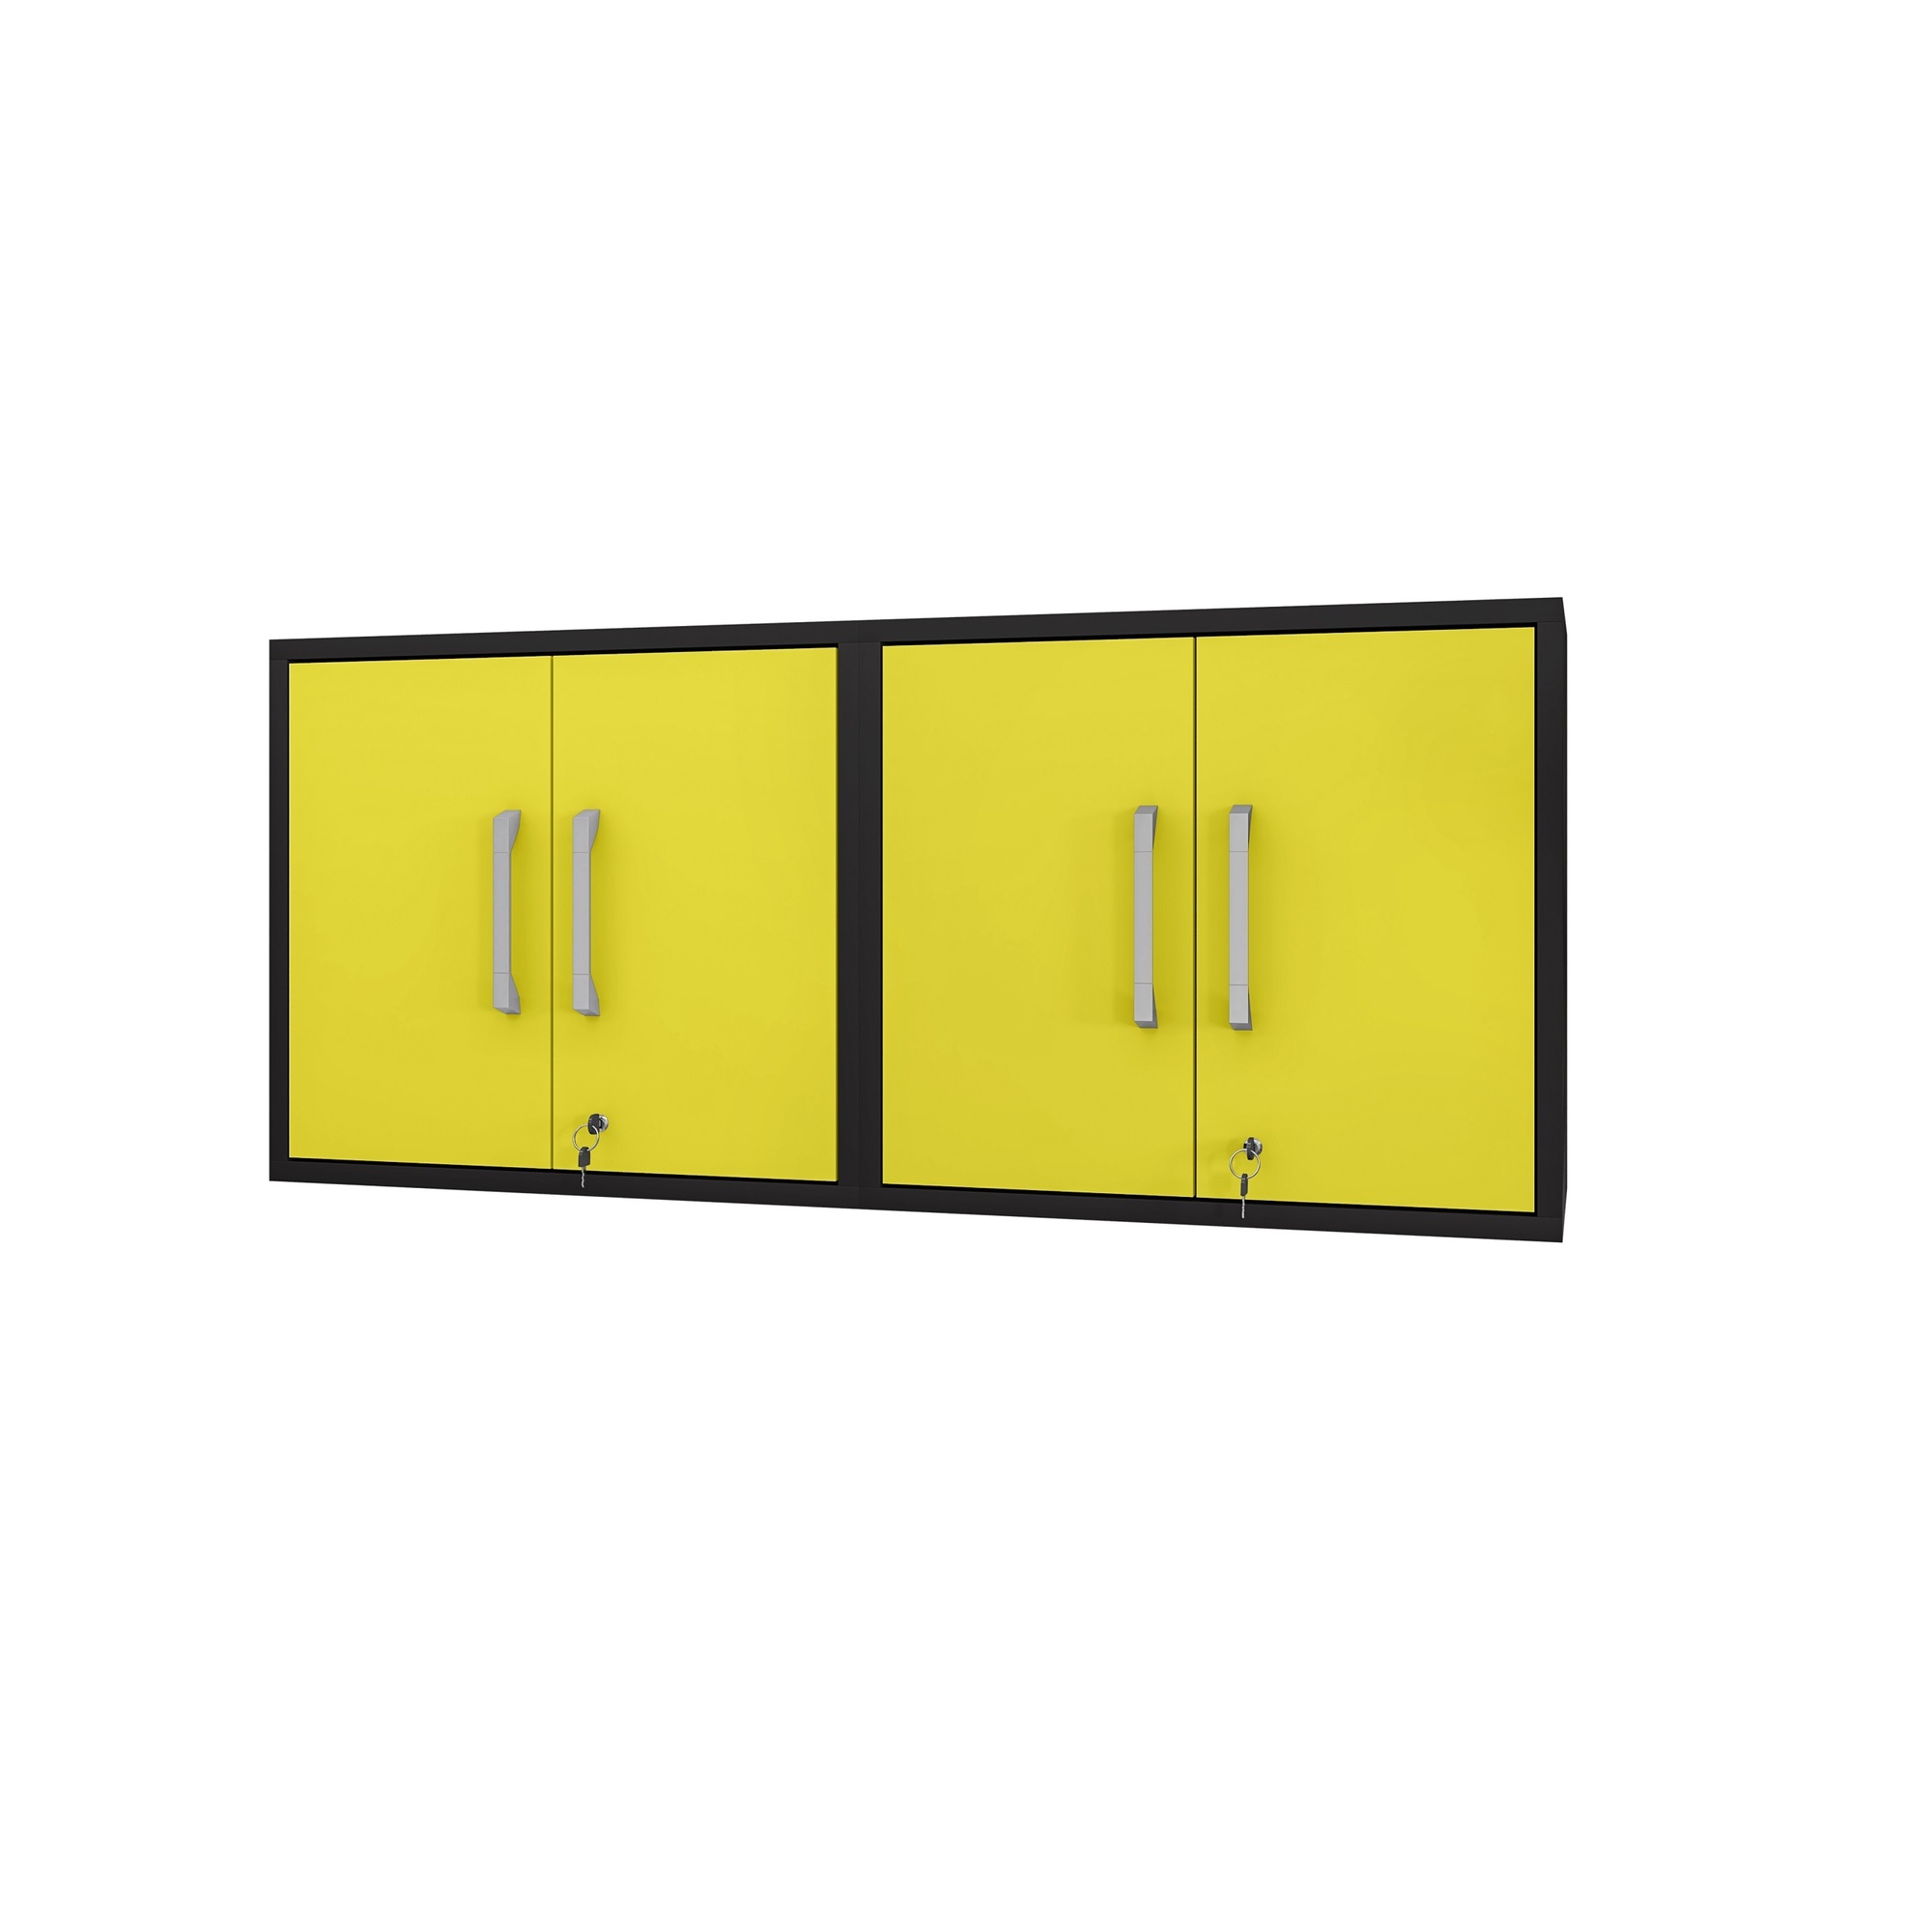 Manhattan Comfort, Eiffel Floating Garage Cabinet Black Yellow Set 2 Height 25.59 in, Width 56.7 in, Color Yellow, Model 2-251BMC